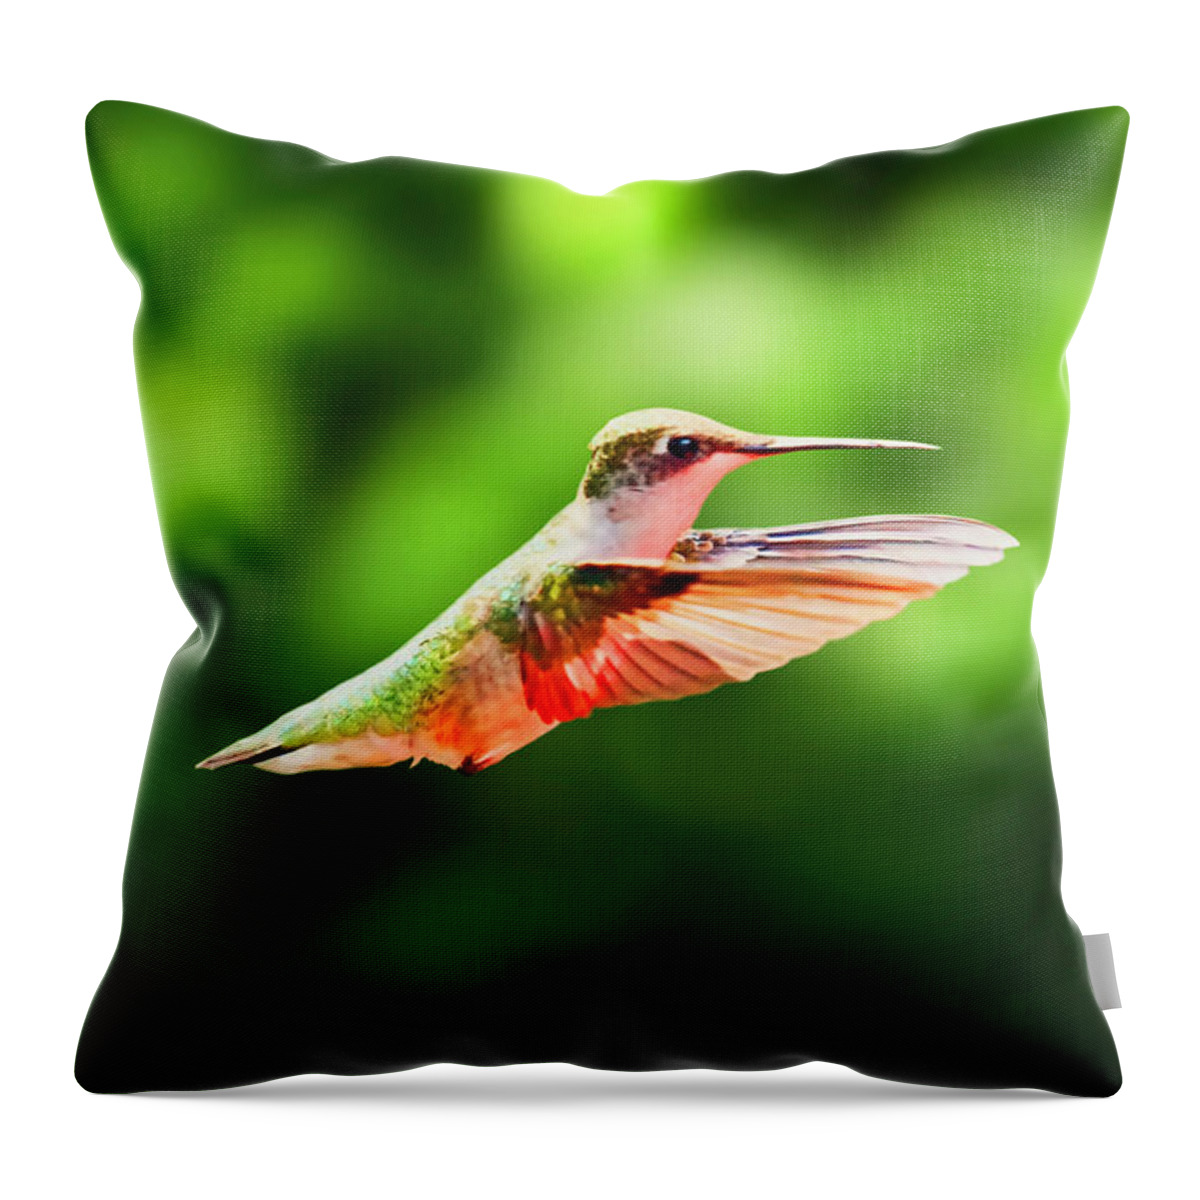 Female Ruby Throat Throw Pillow featuring the photograph Hummingbird Flying by Meta Gatschenberger